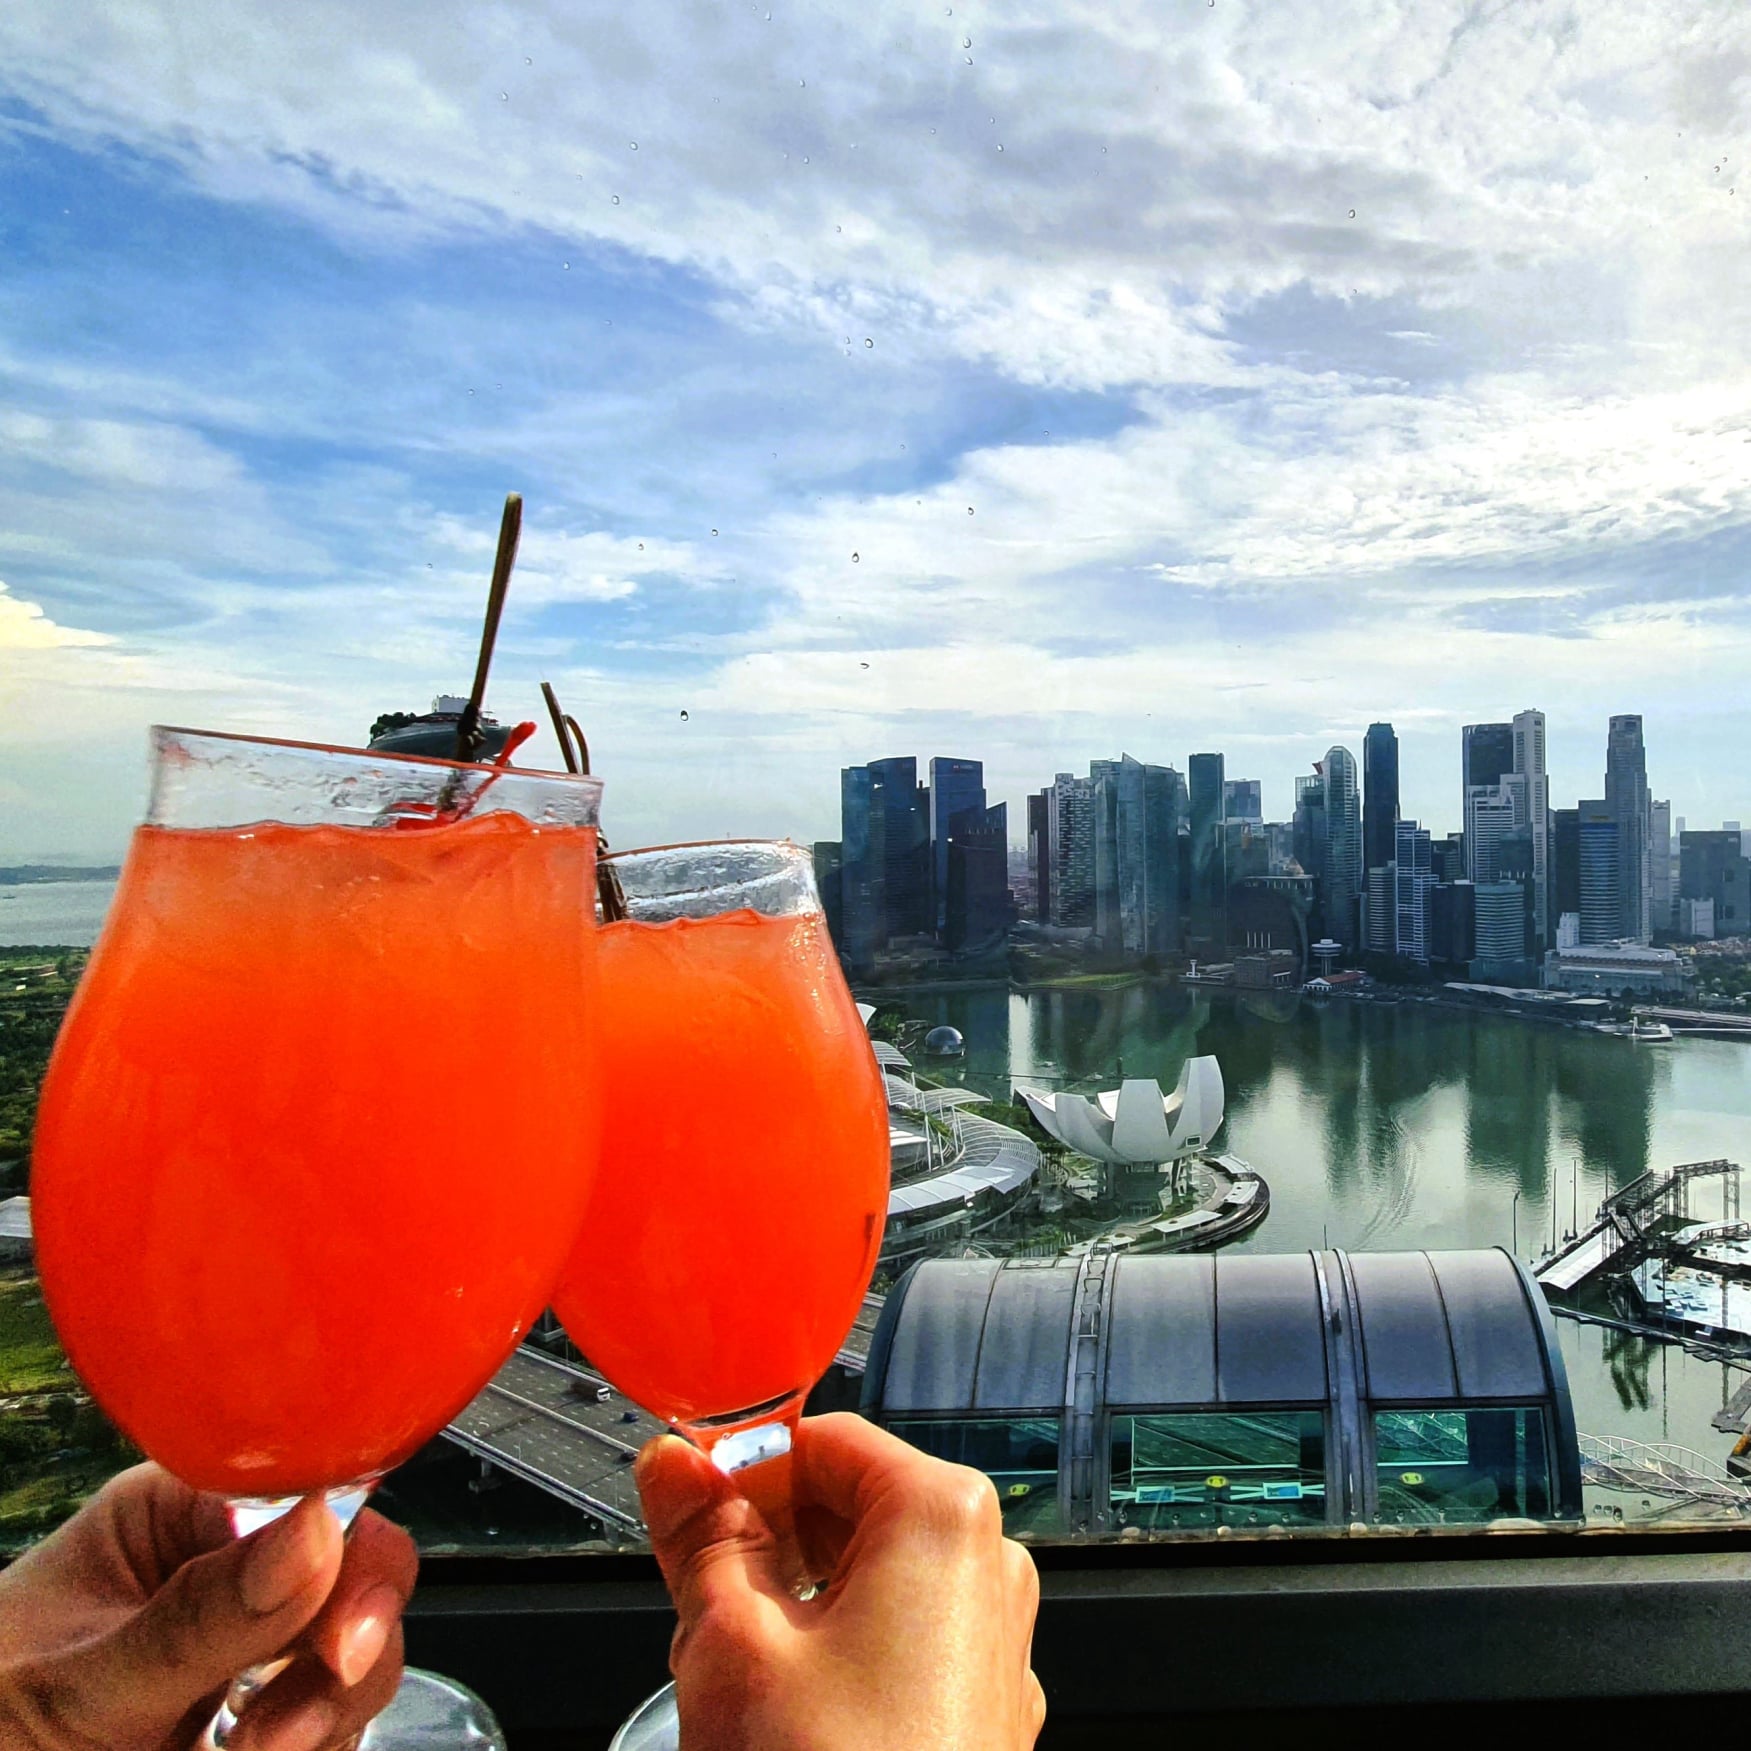 Singapore Flyer - Singapore Sling Experience